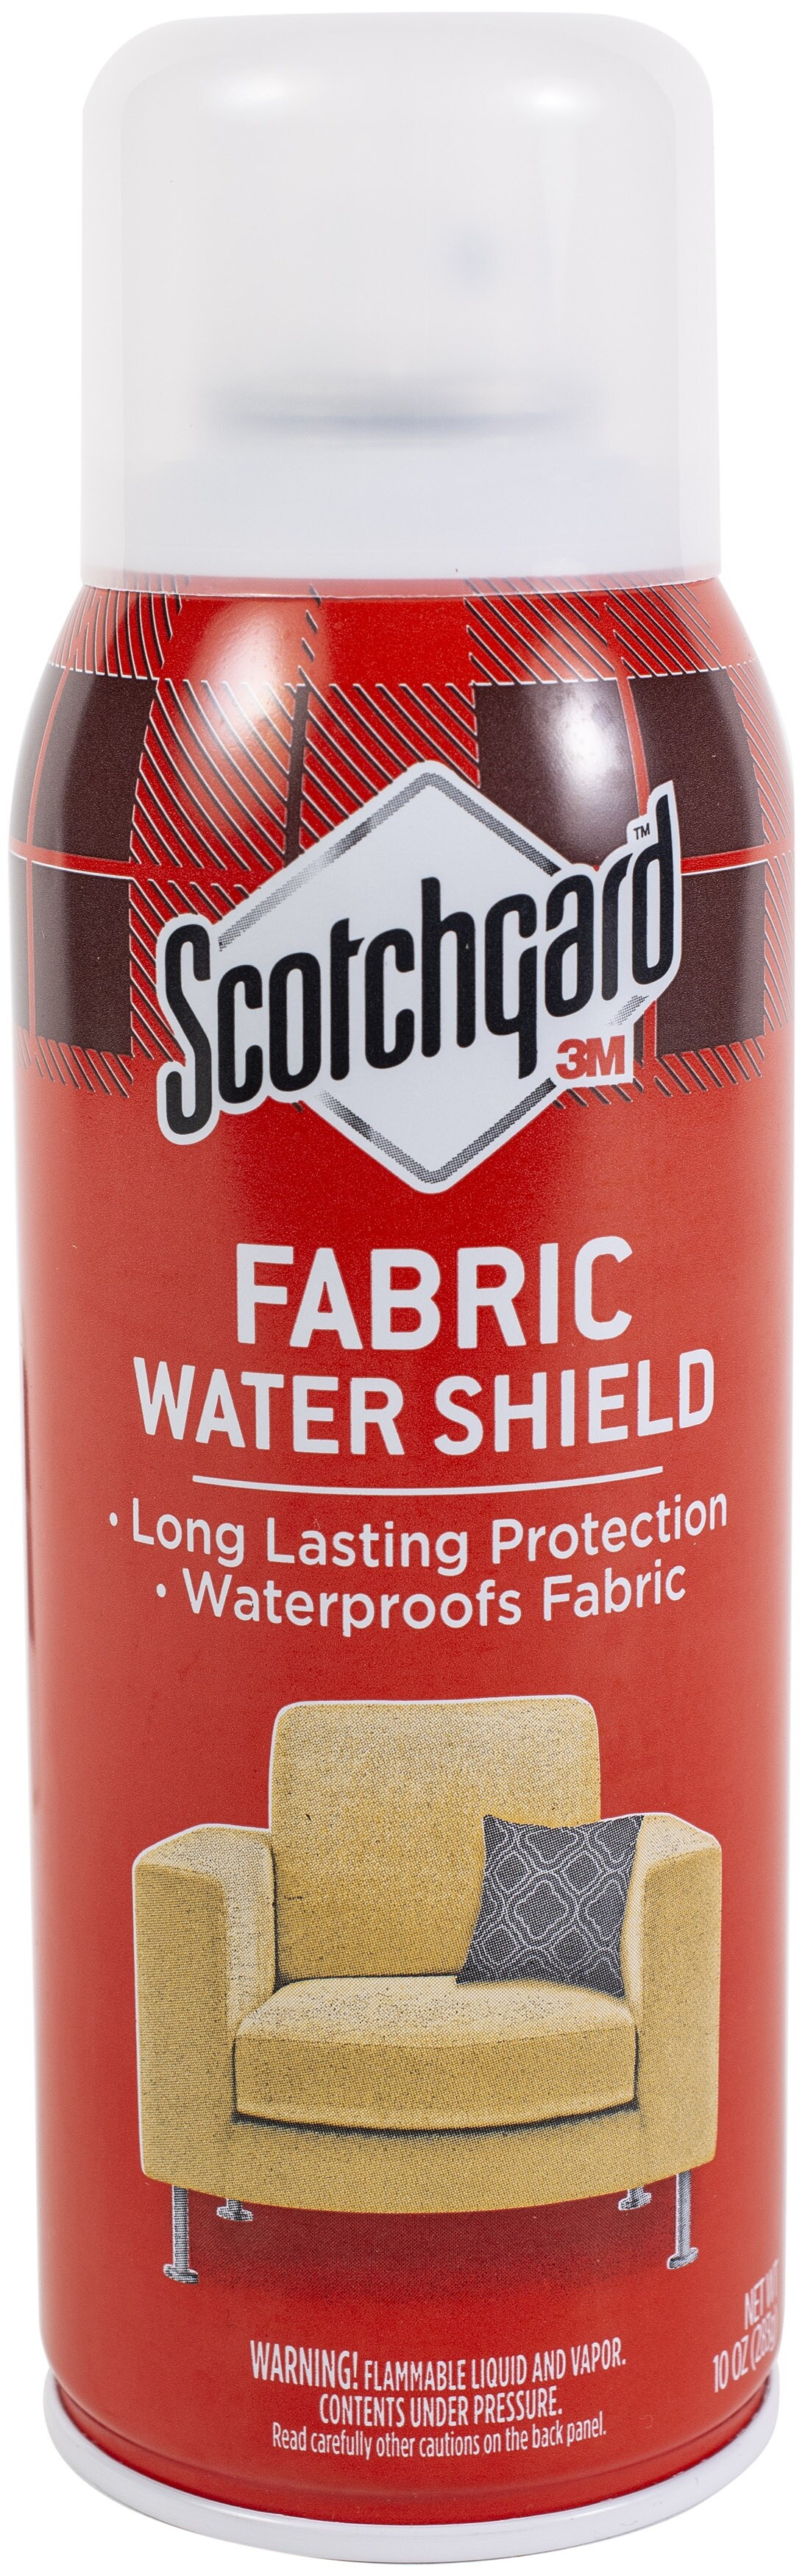 Scotchgard Craft Fabric Water Shield, 10 fl oz., 1 Can 